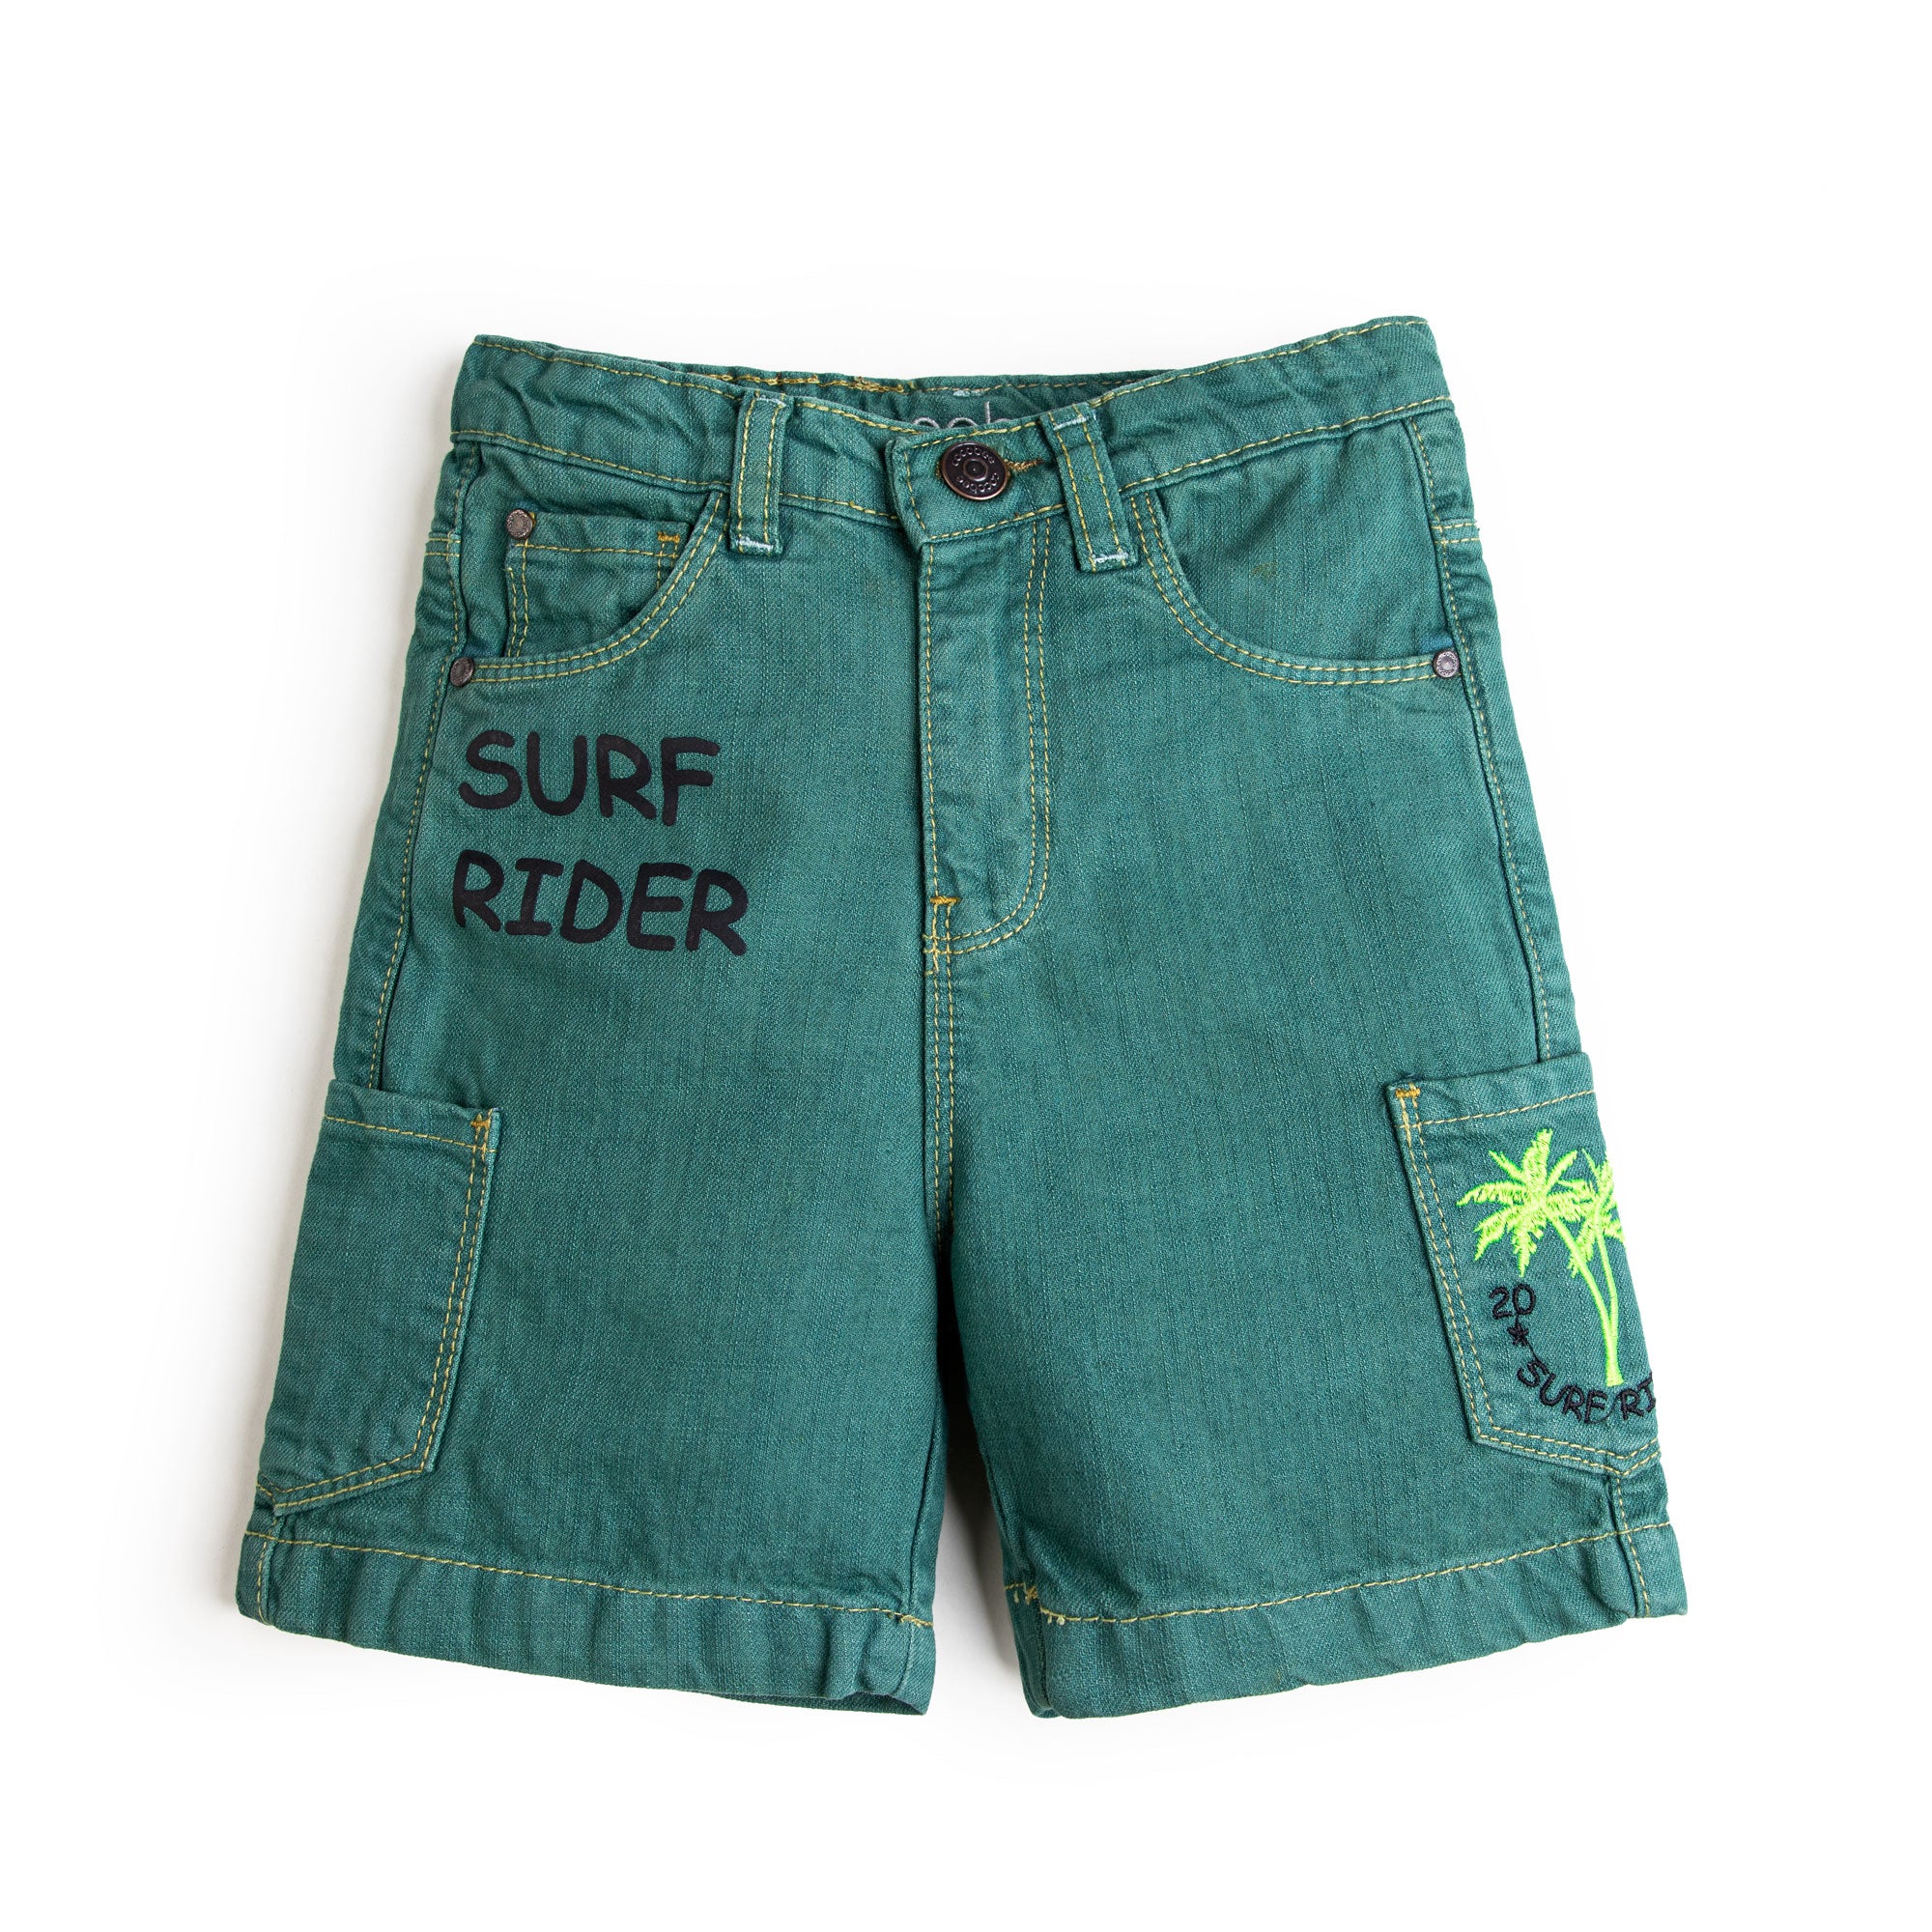 Surf Rider Jeans shorts